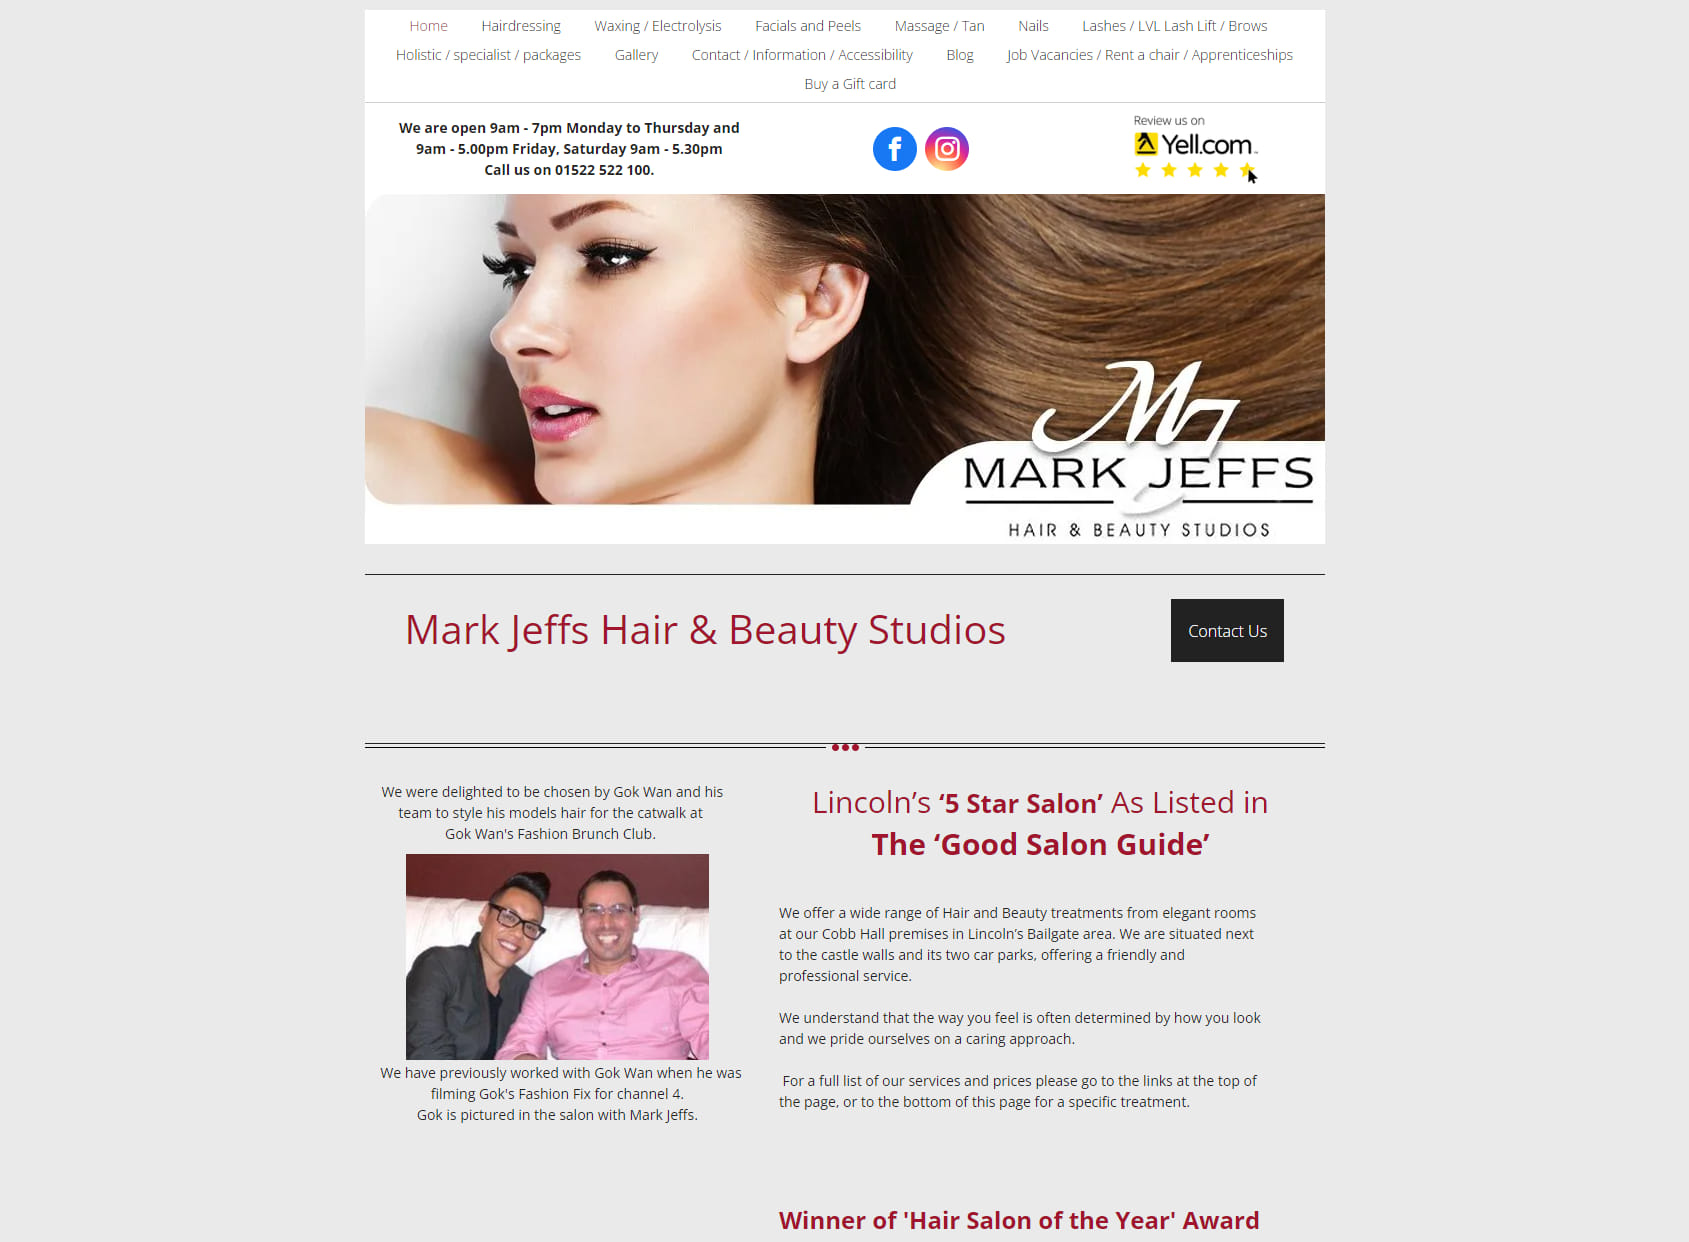 Mark Jeffs Hair and Beauty Studios